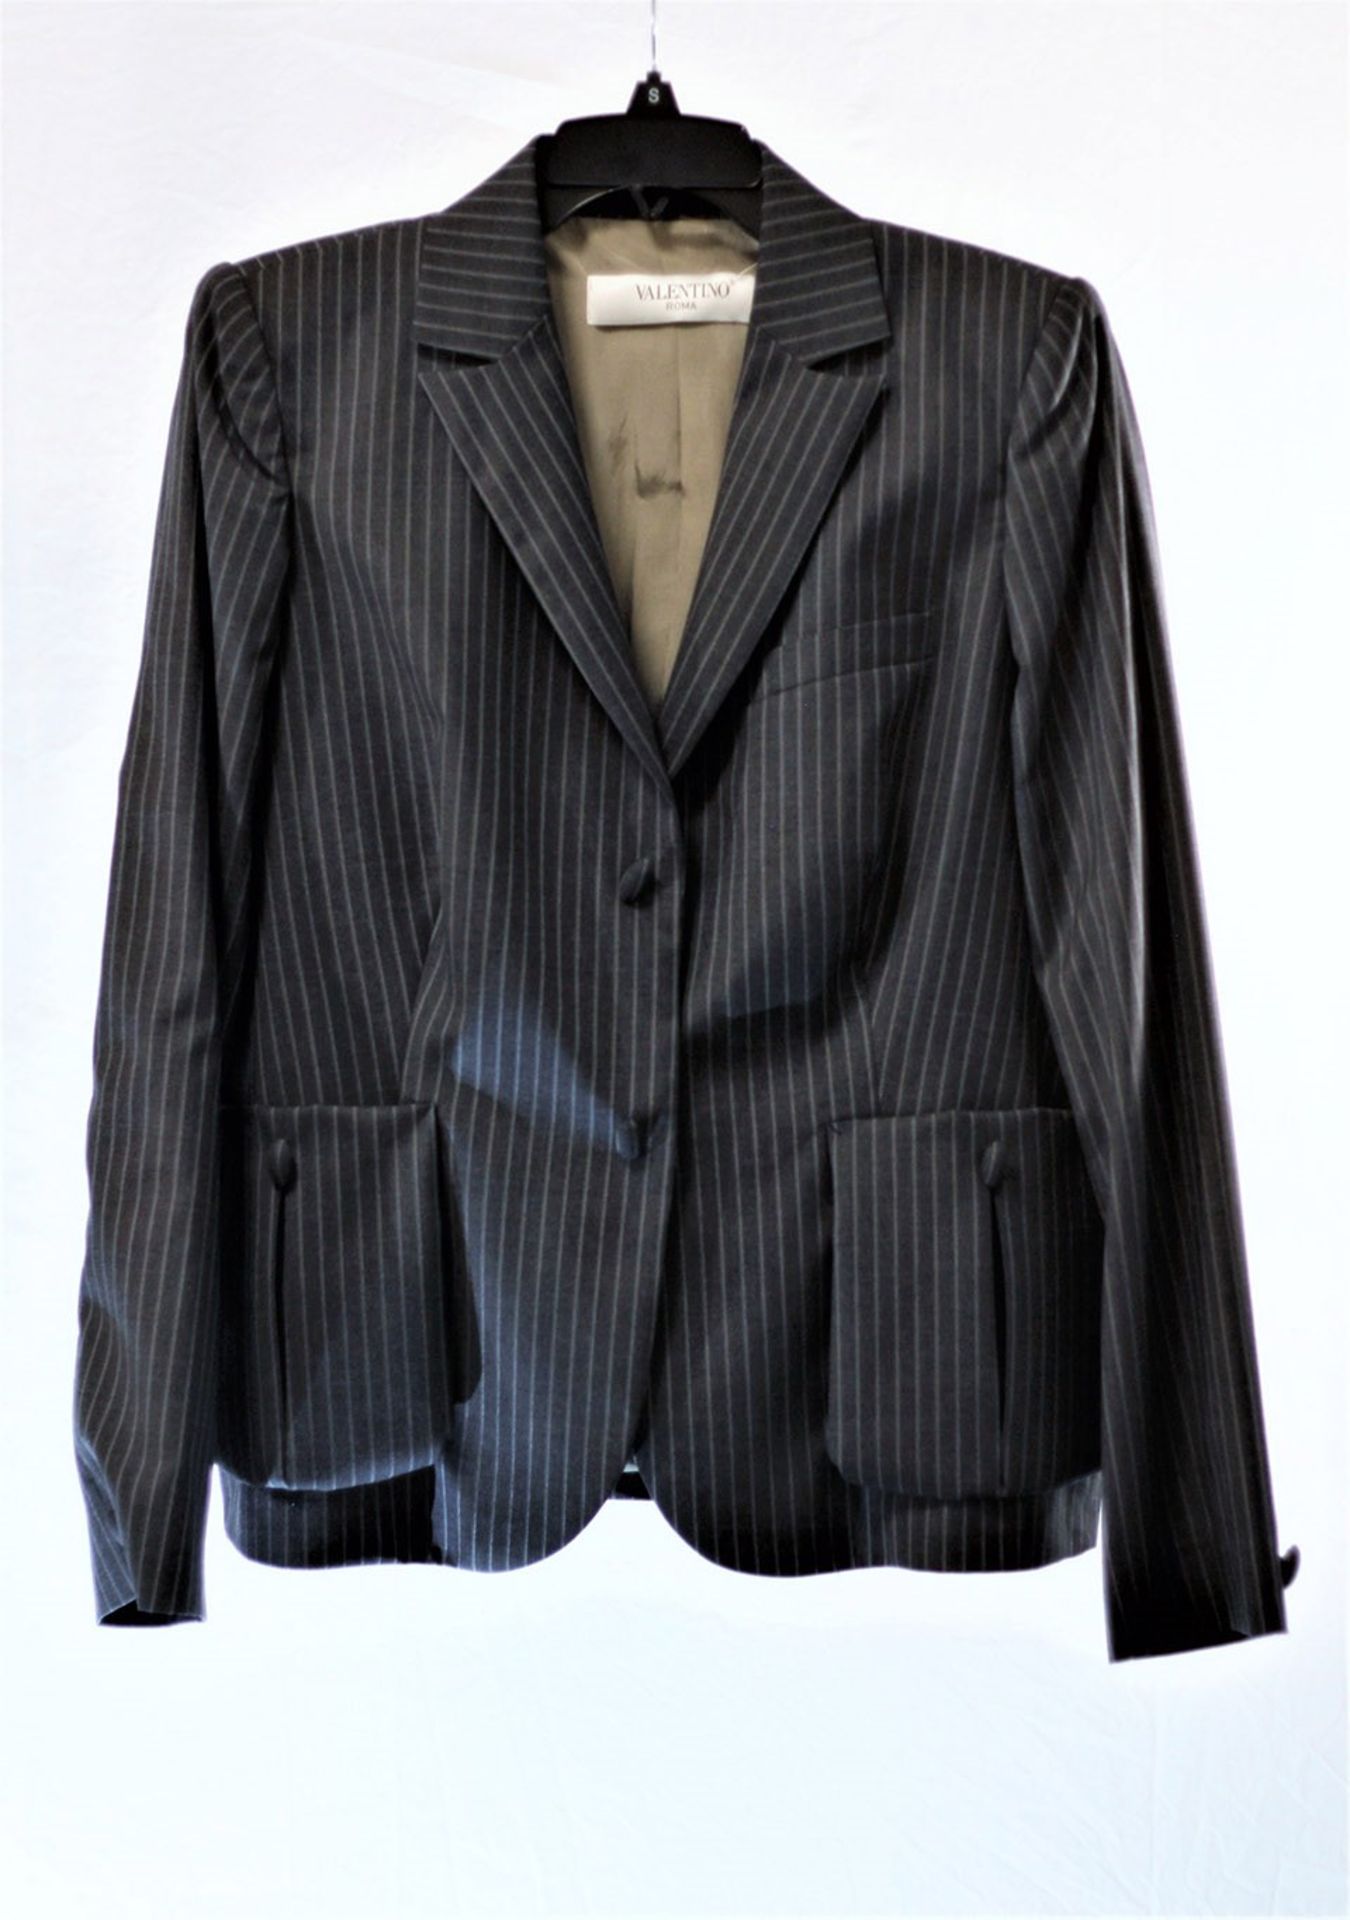 1 x Valentino Roma Grey Stripped Blazer - Size: 18 - Material: Lining 57% Acetate, 43% Cotton.